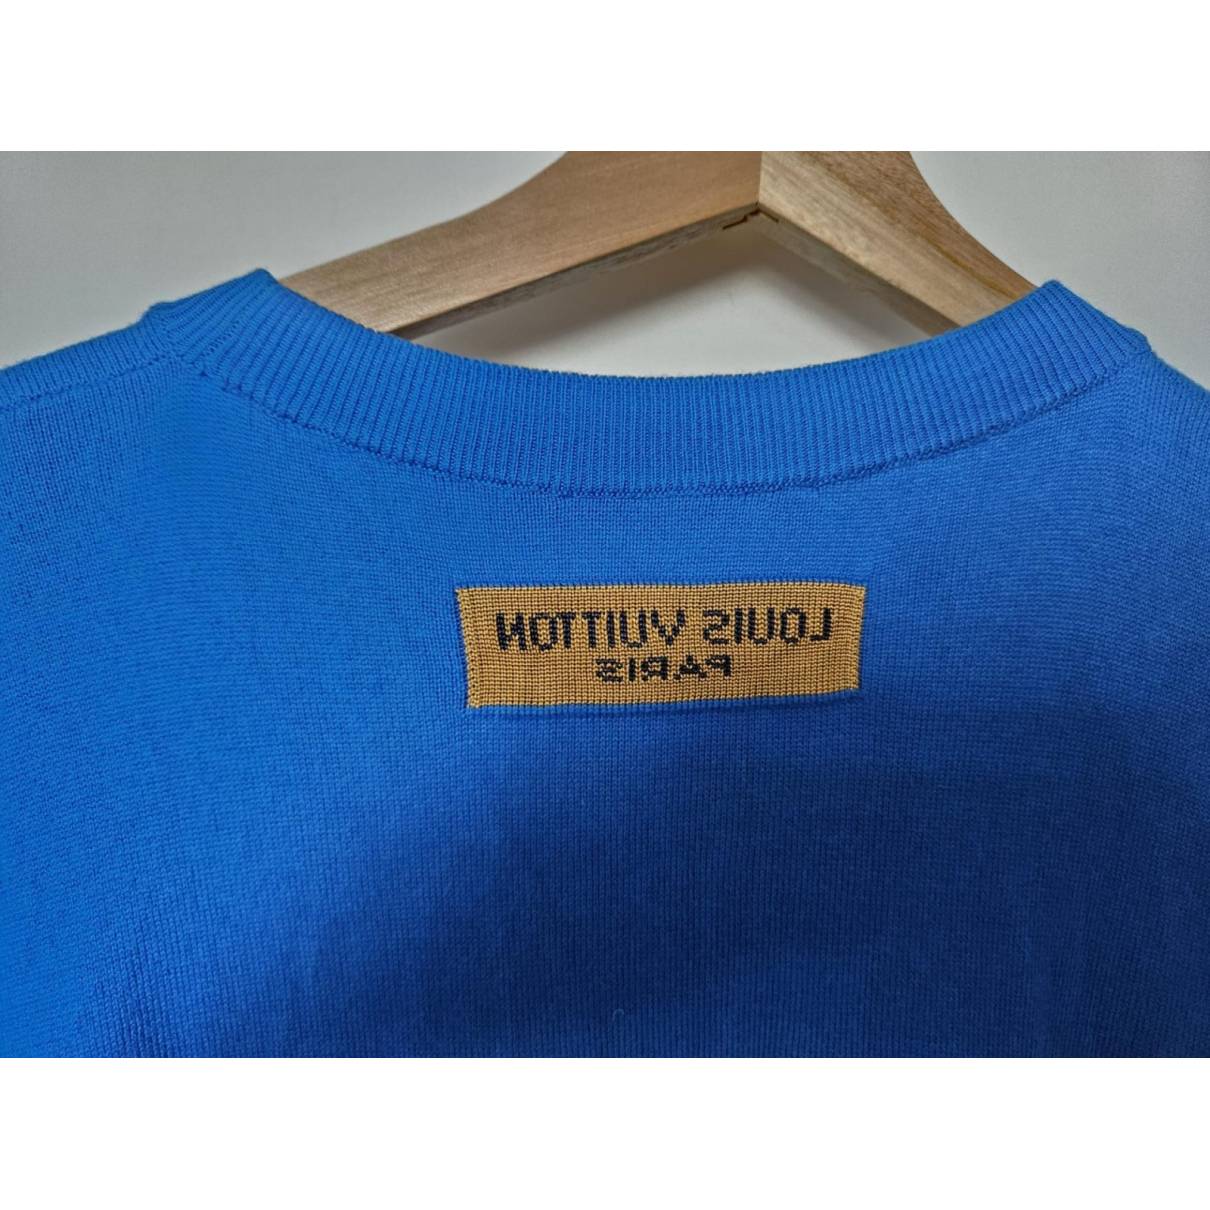 T-shirt Louis Vuitton Blue size M International in Polyester - 22444421